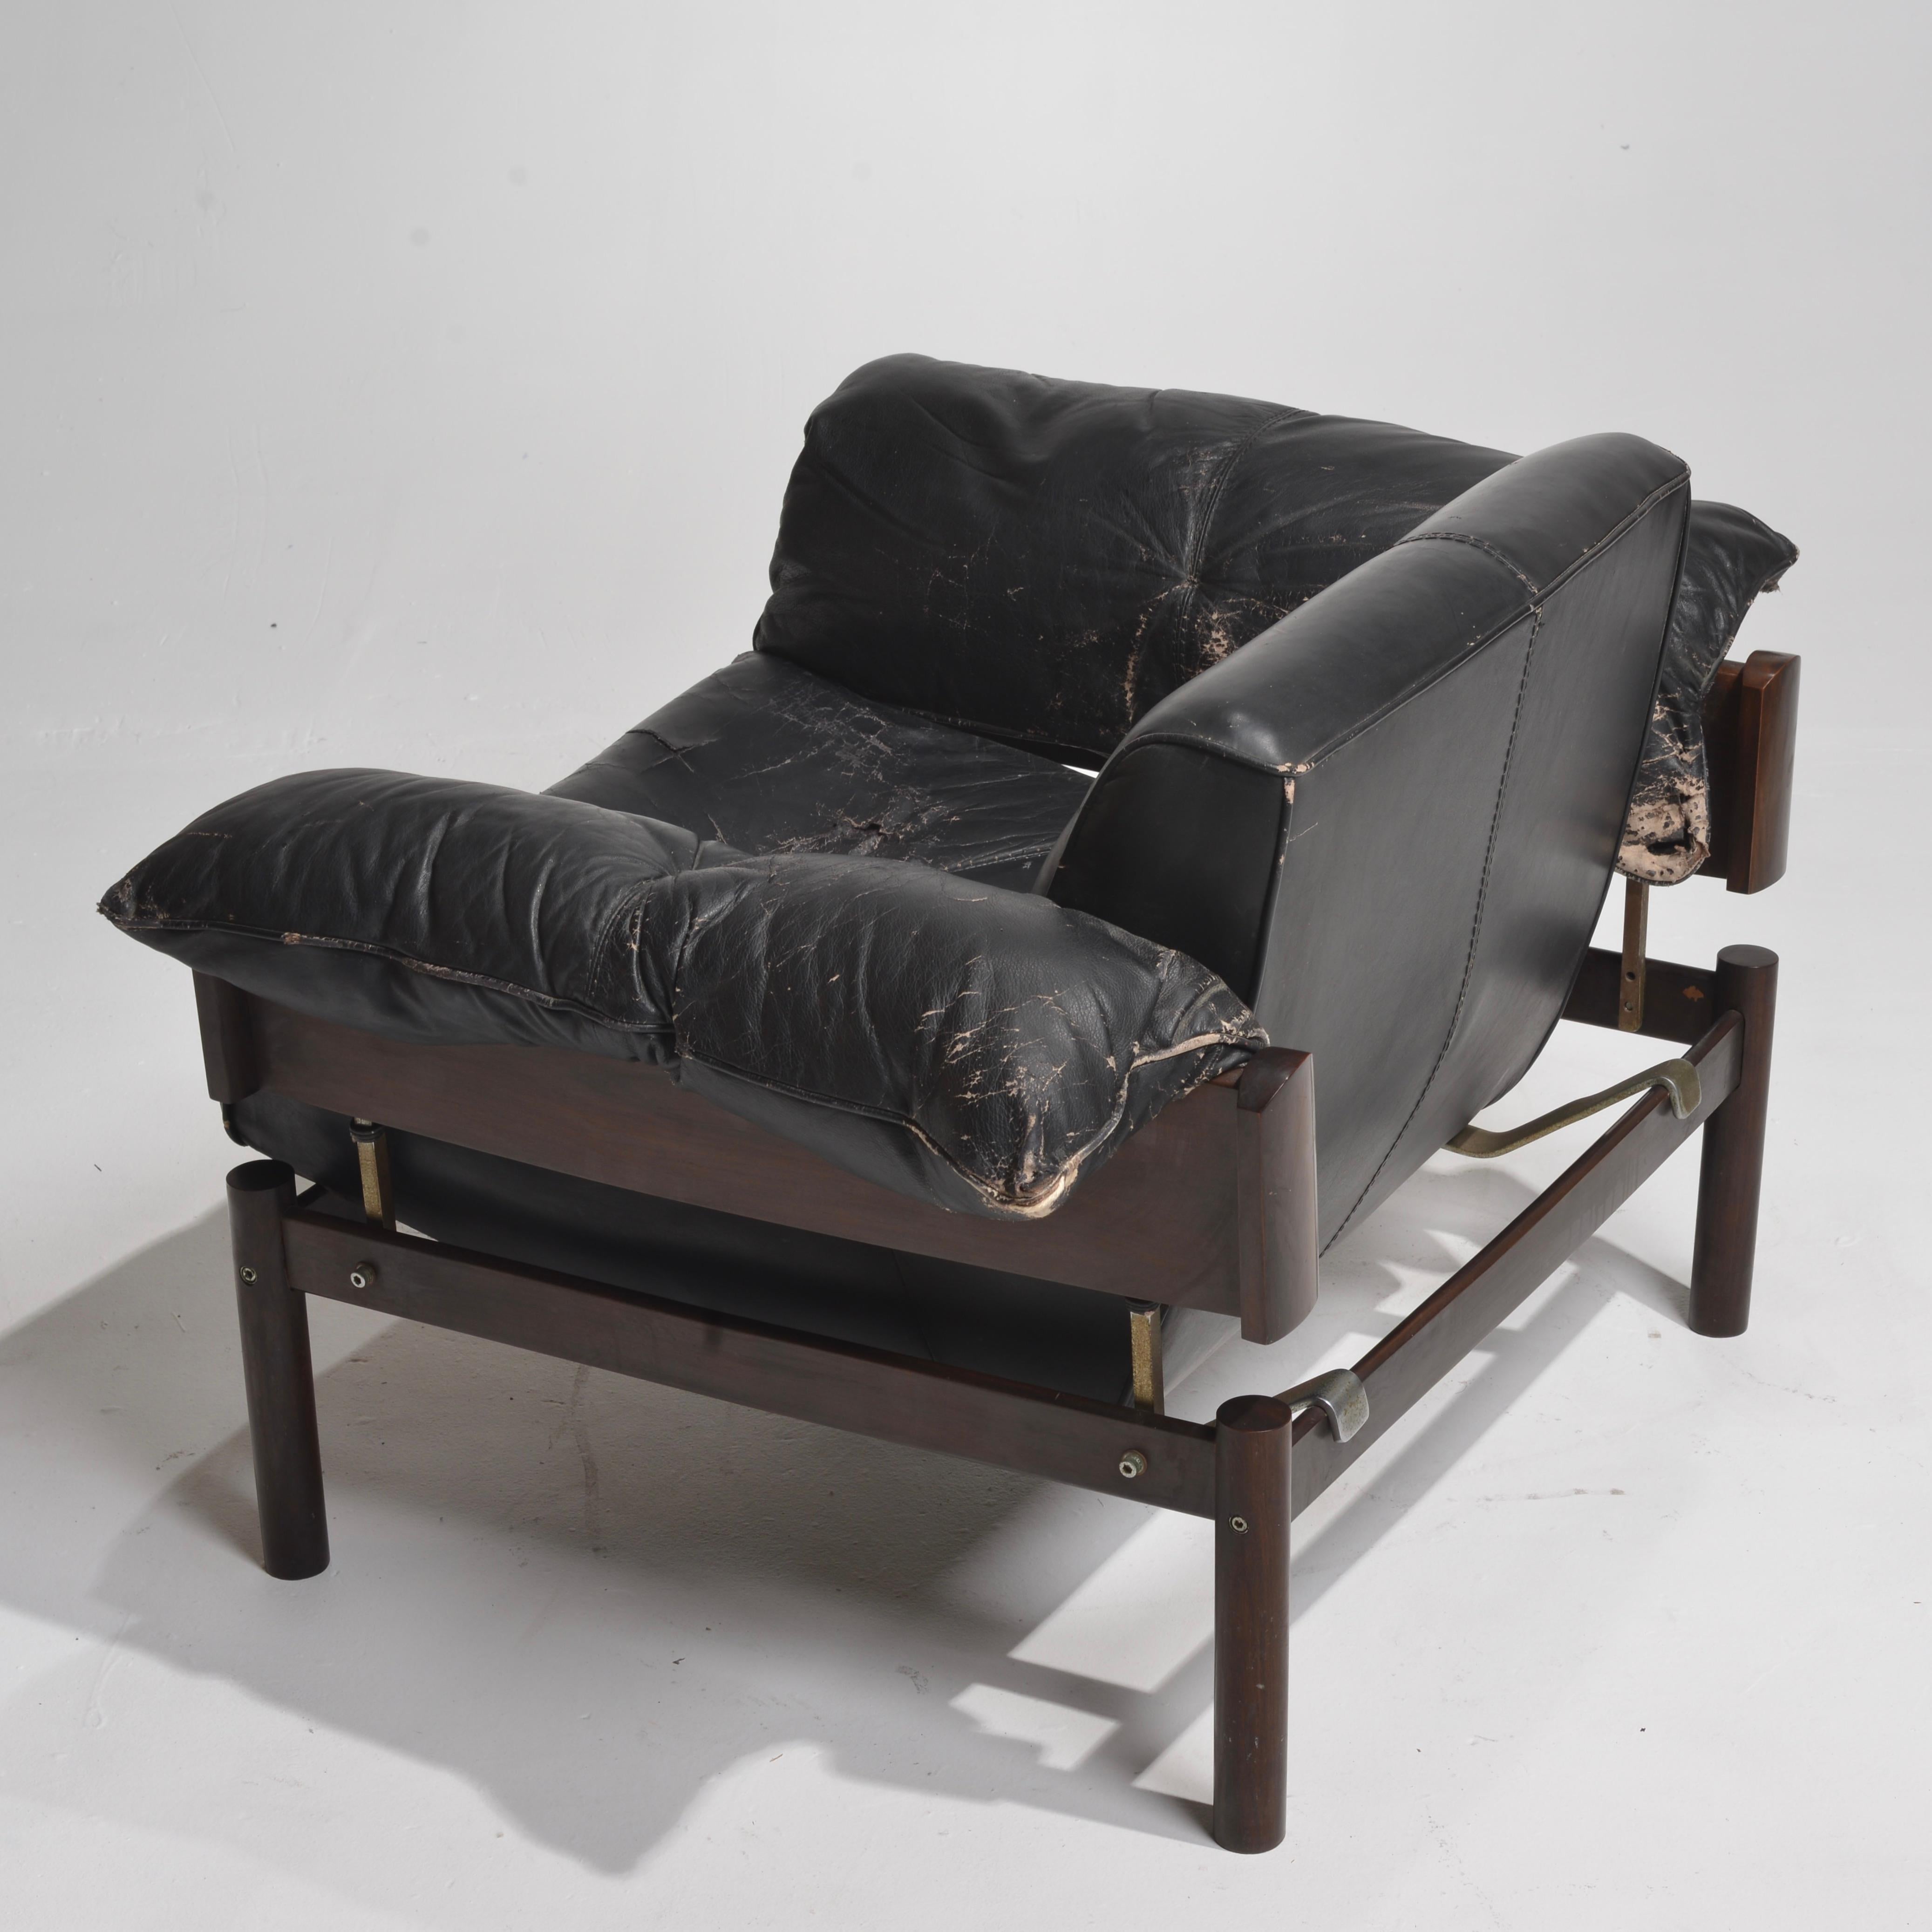 Percival Lafer Brazilian Modernist Rosewood Chair Model MP-013 1